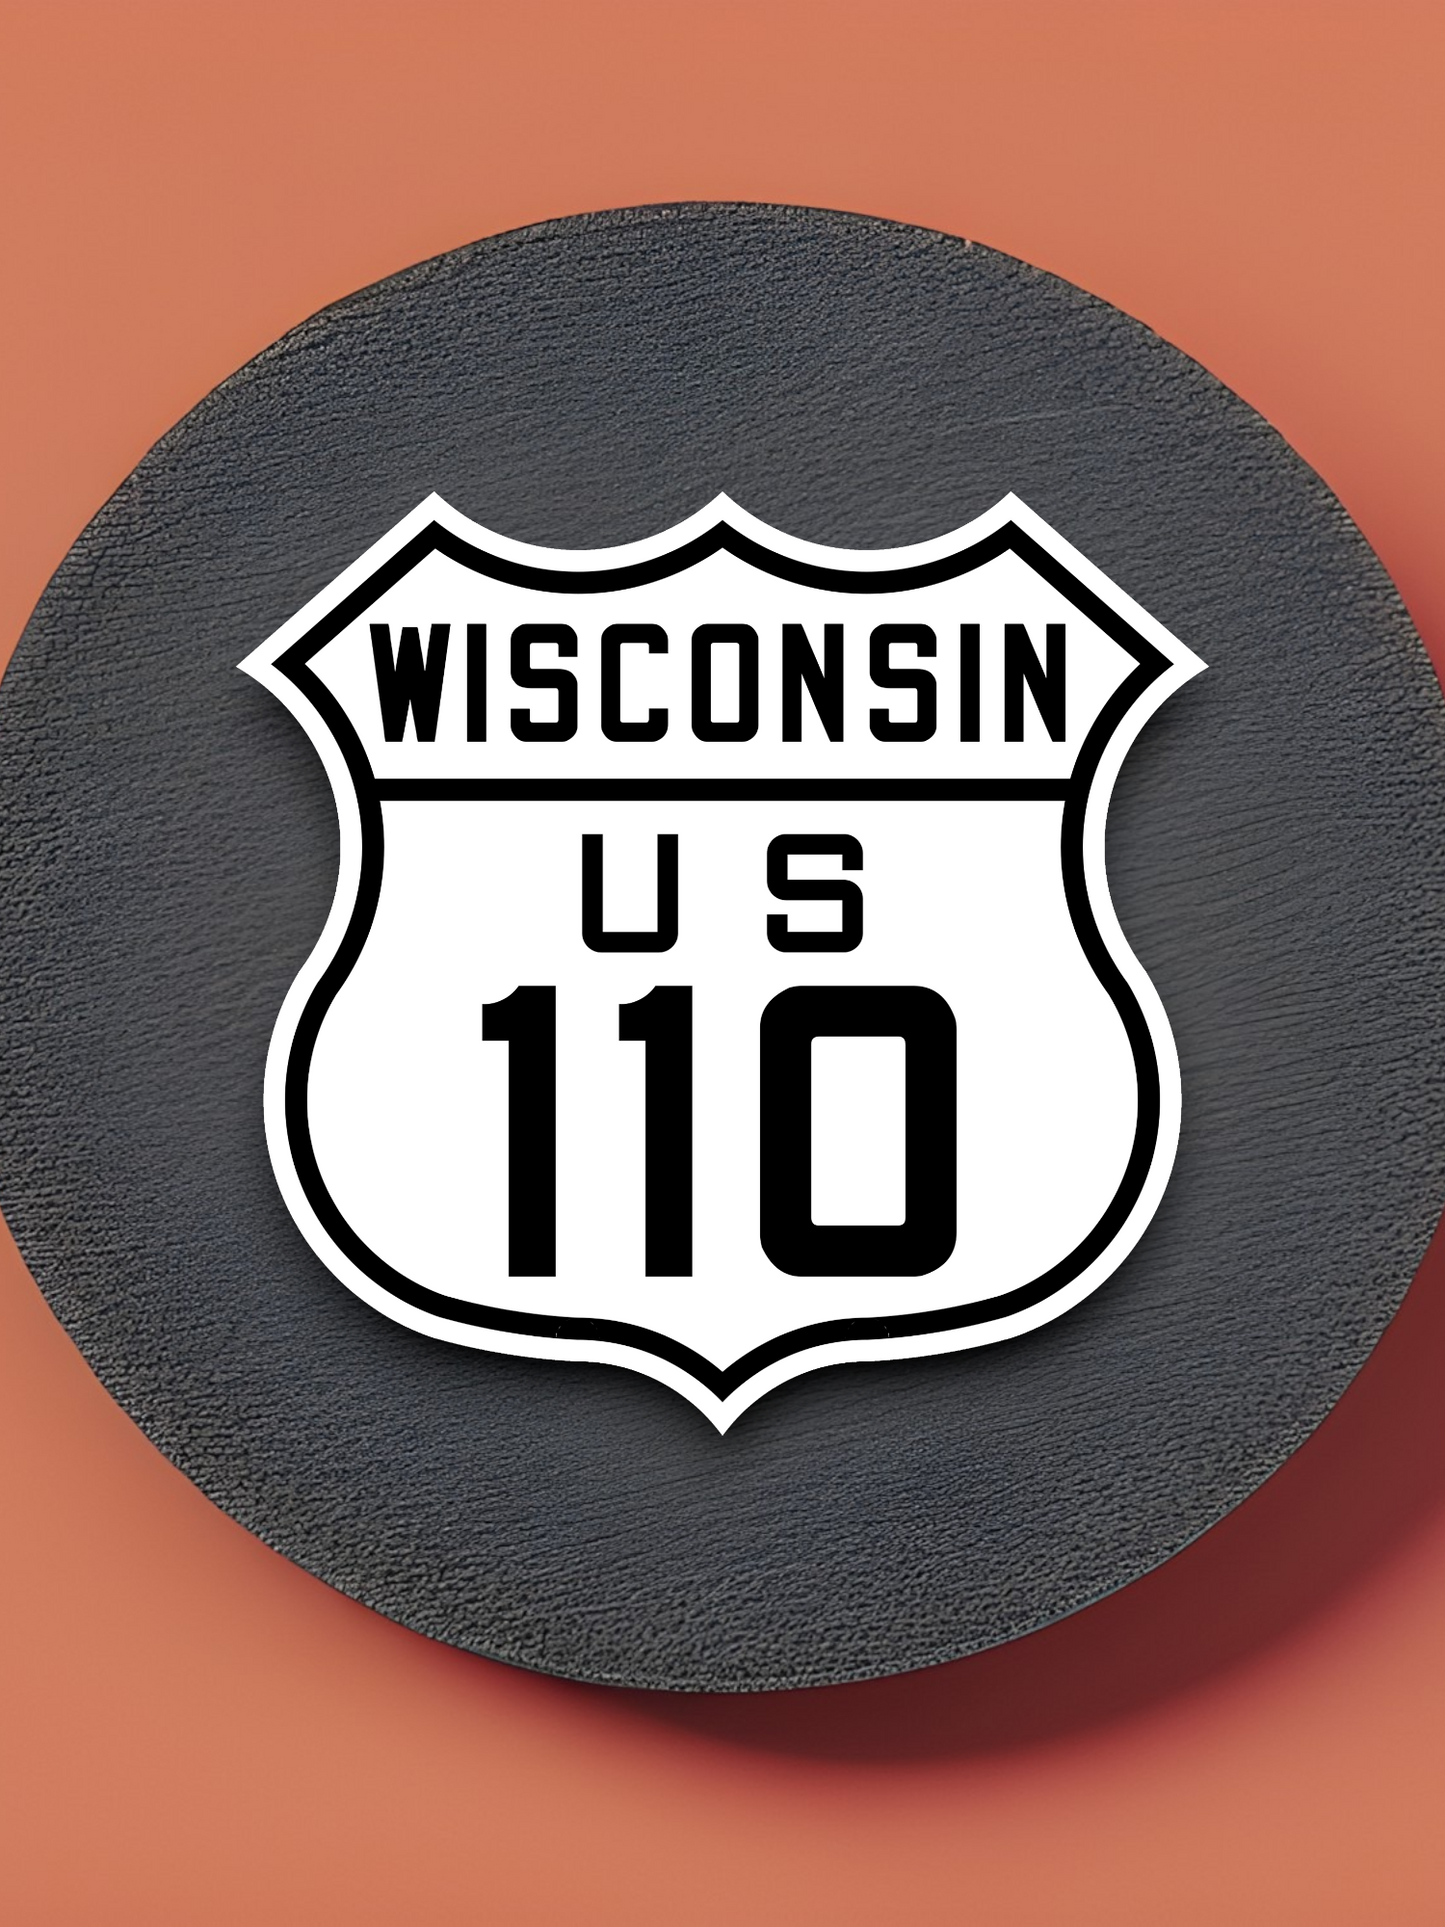 U.S. Route 110 Wisconsin Road Sign Sticker